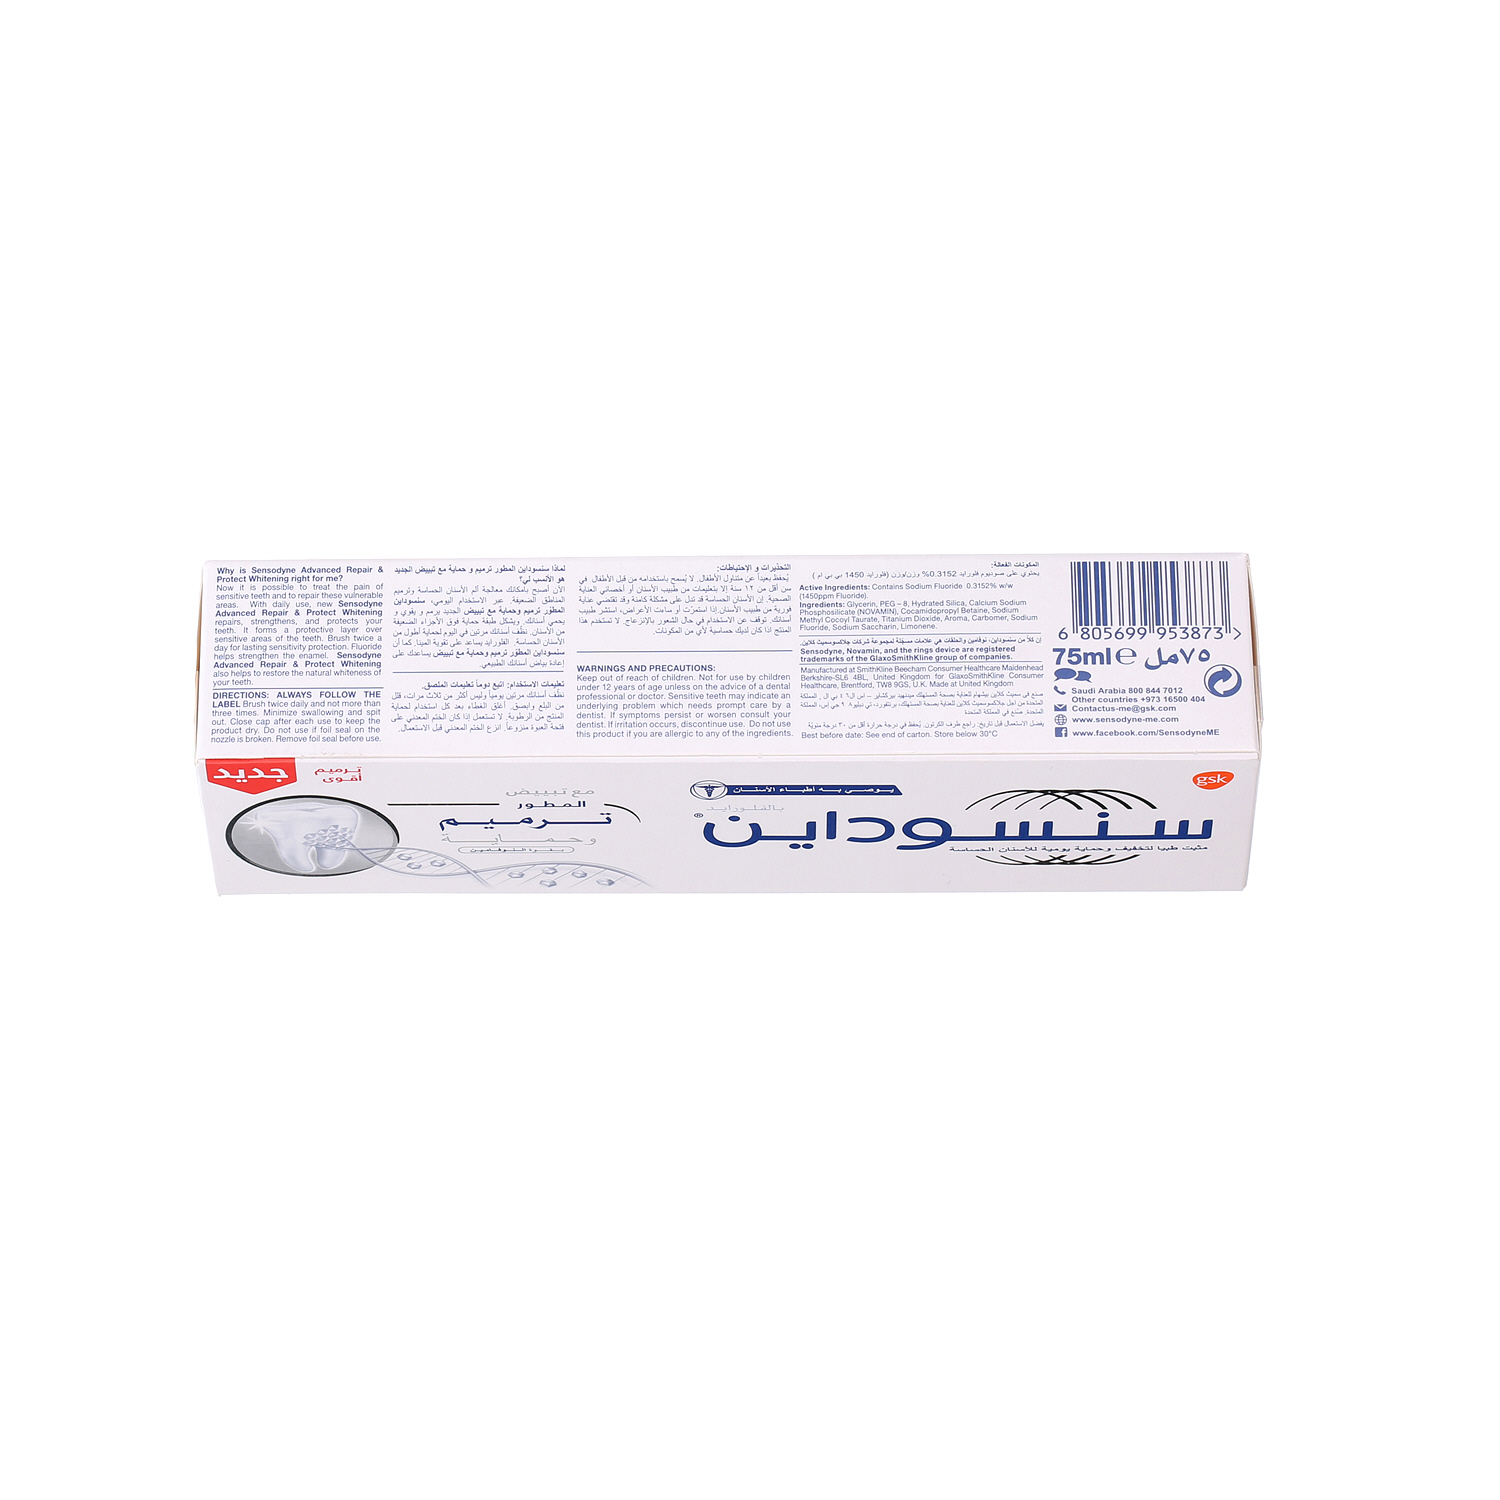 Sensodyne Toothpaste Advanced Repair & Protect Whitening 75ml